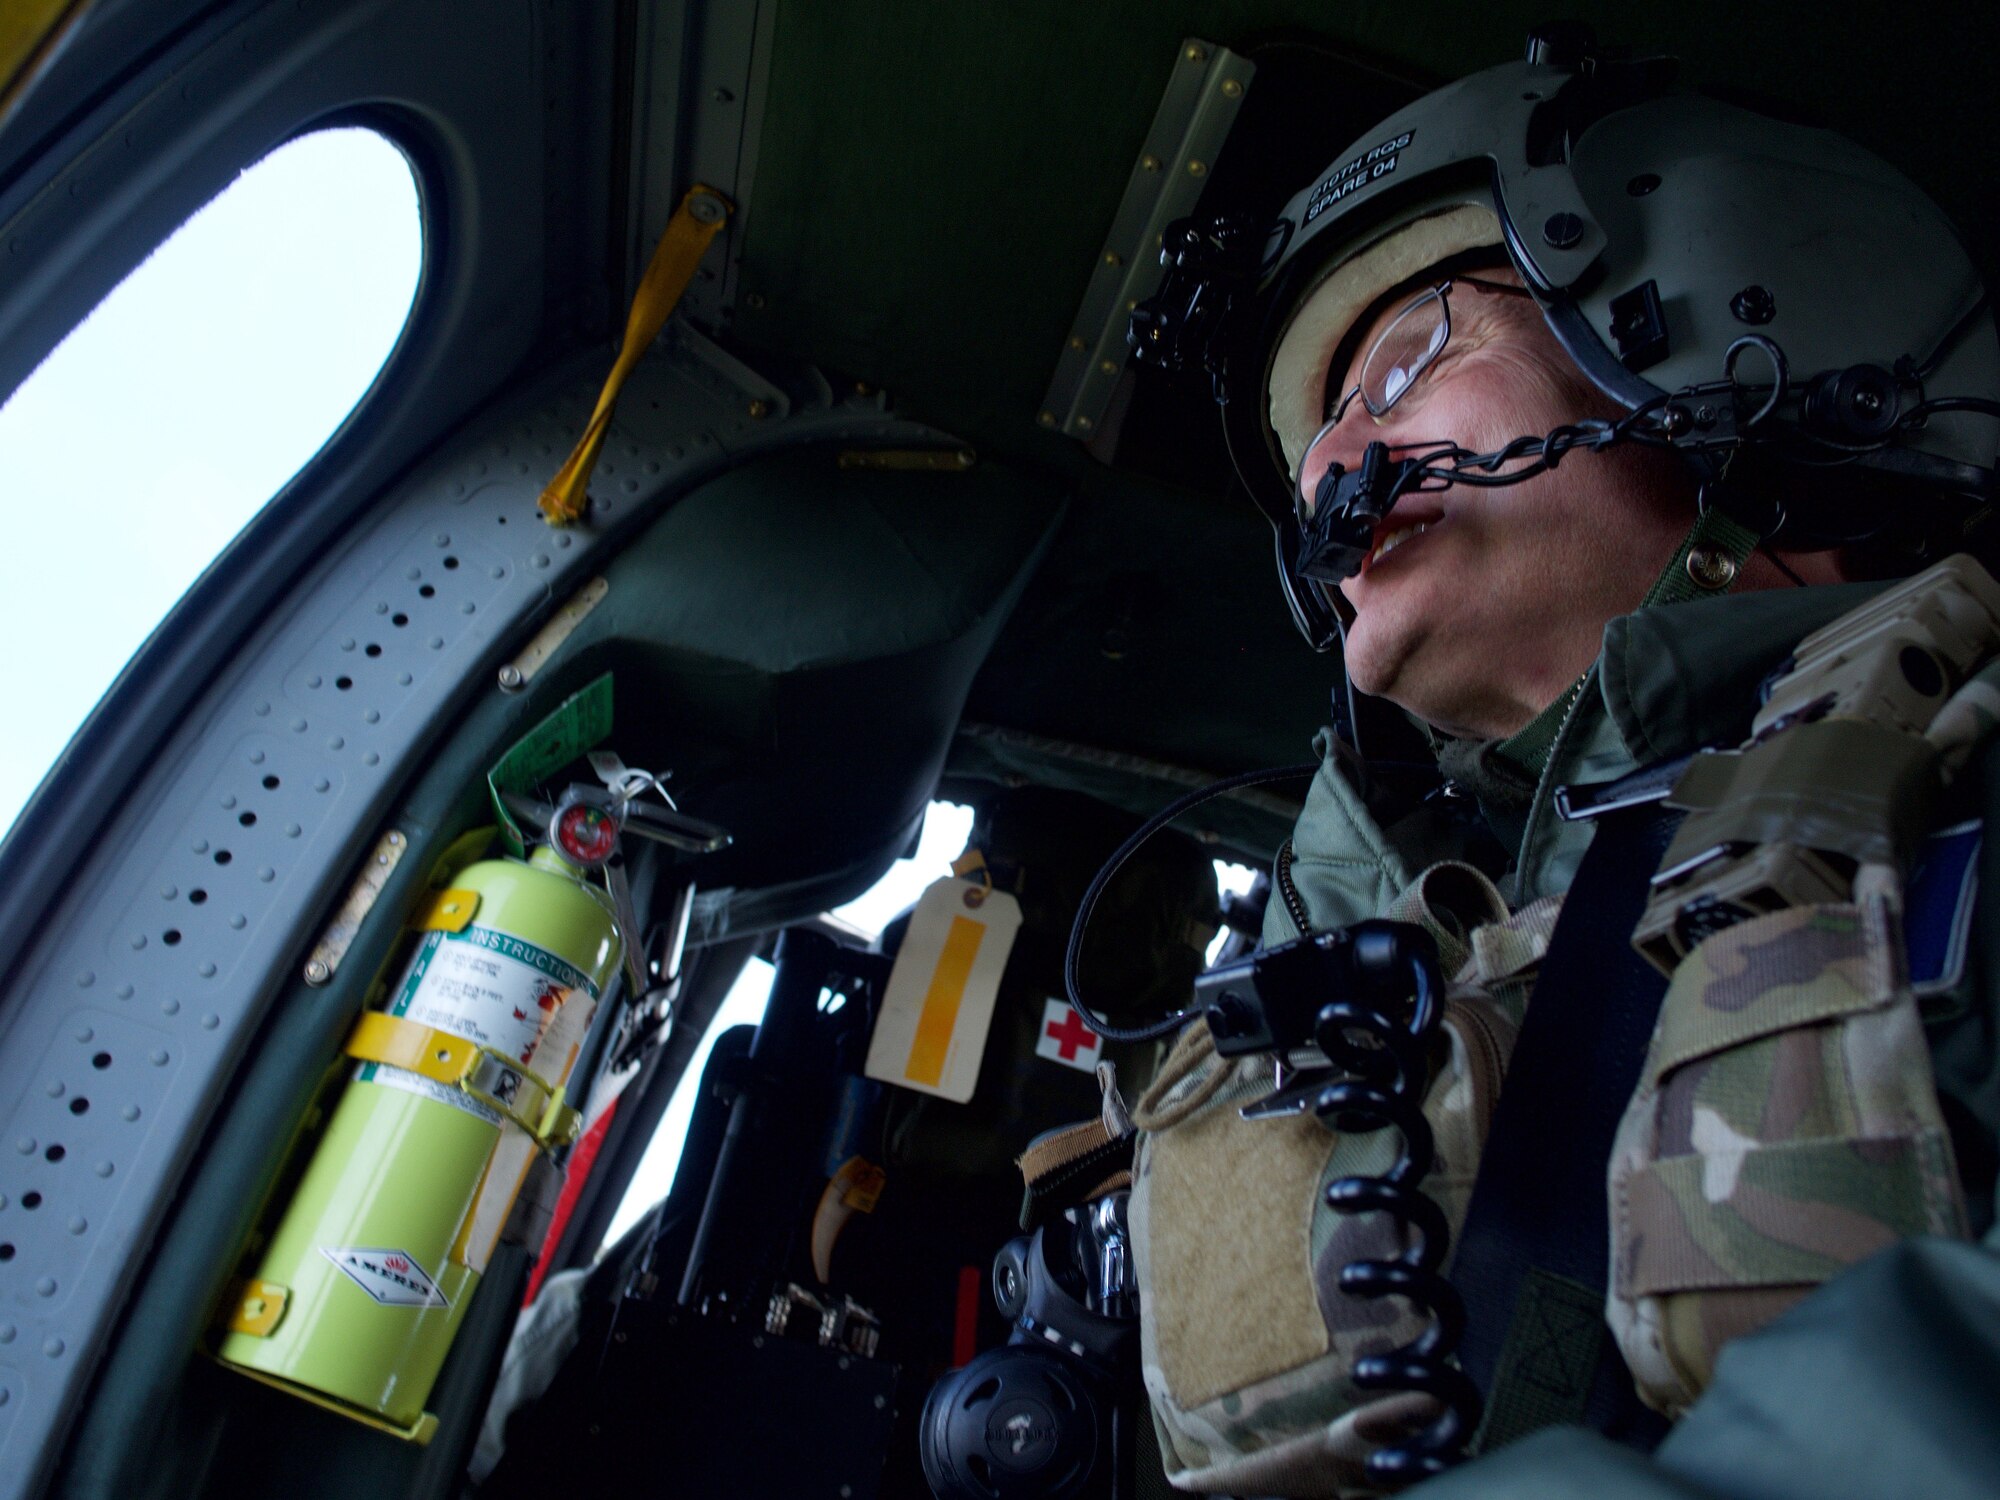 Chief Master Sgt. Lance Jordan flies with Pave Hawk crew for fini flight.